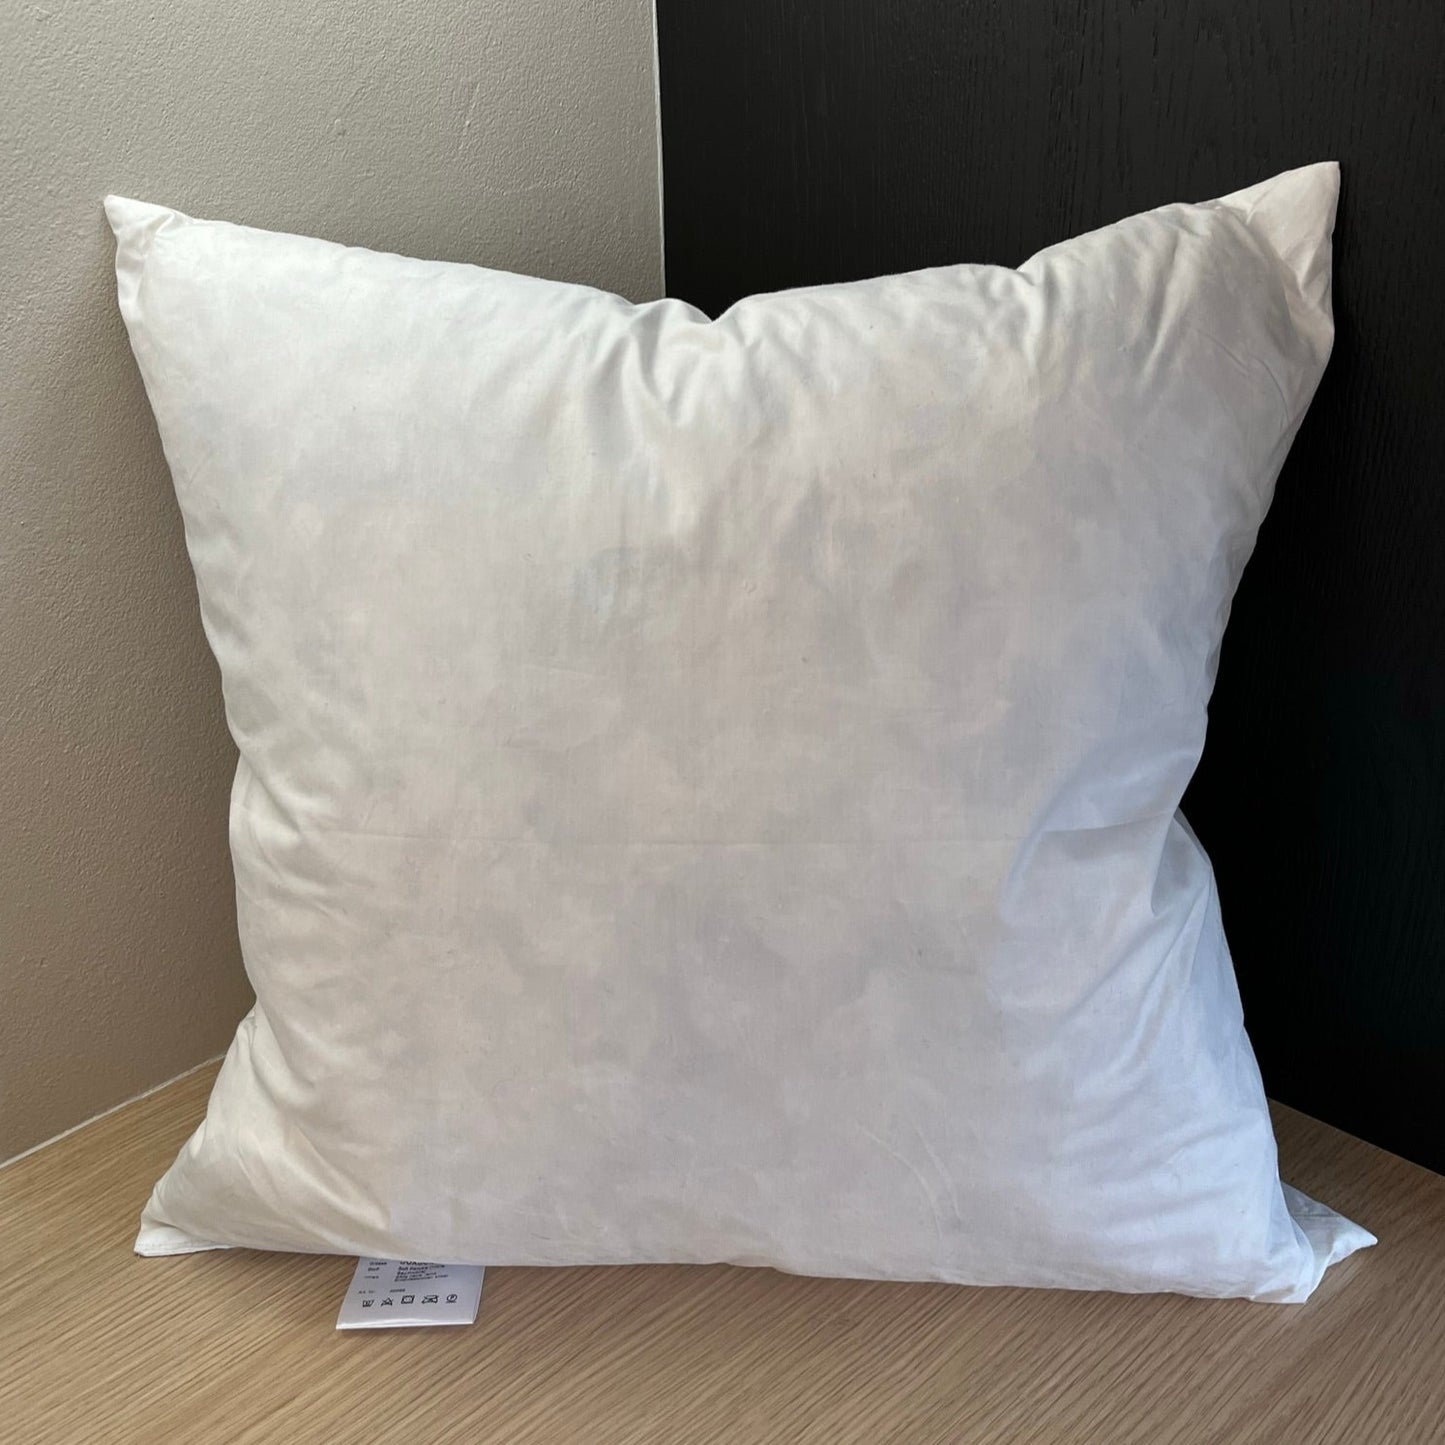 Cushion pad for decorative cushion cover